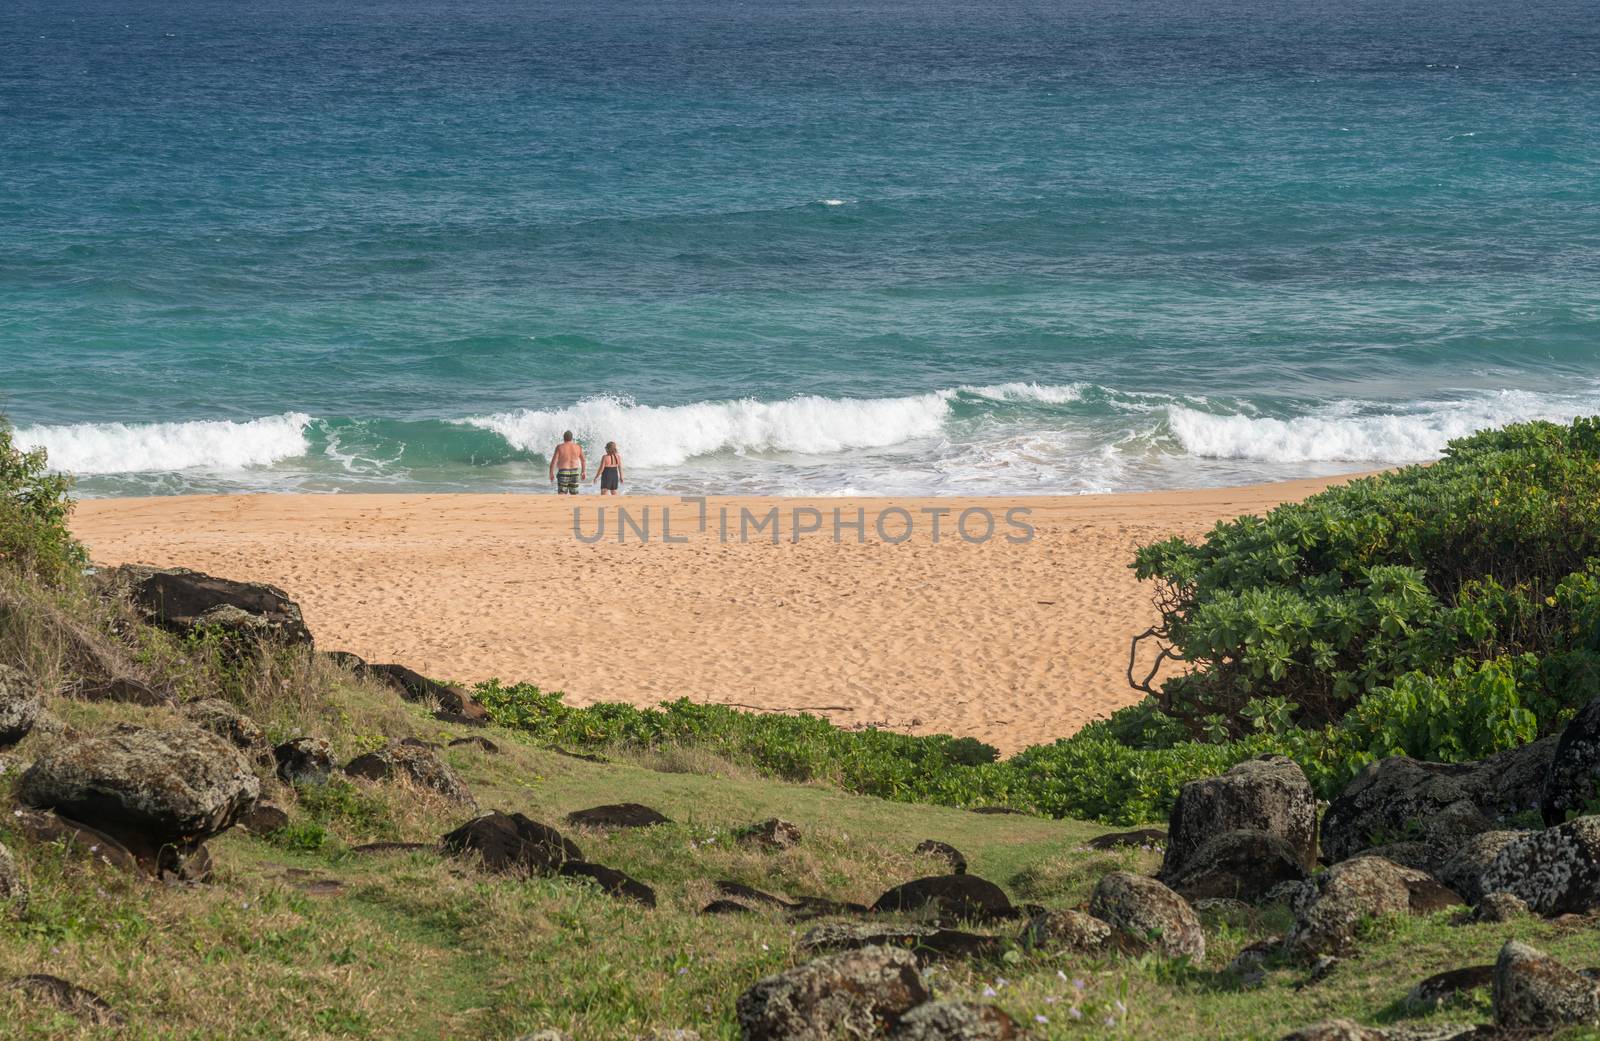 Tourists on Donkey Beach in Kauai by steheap